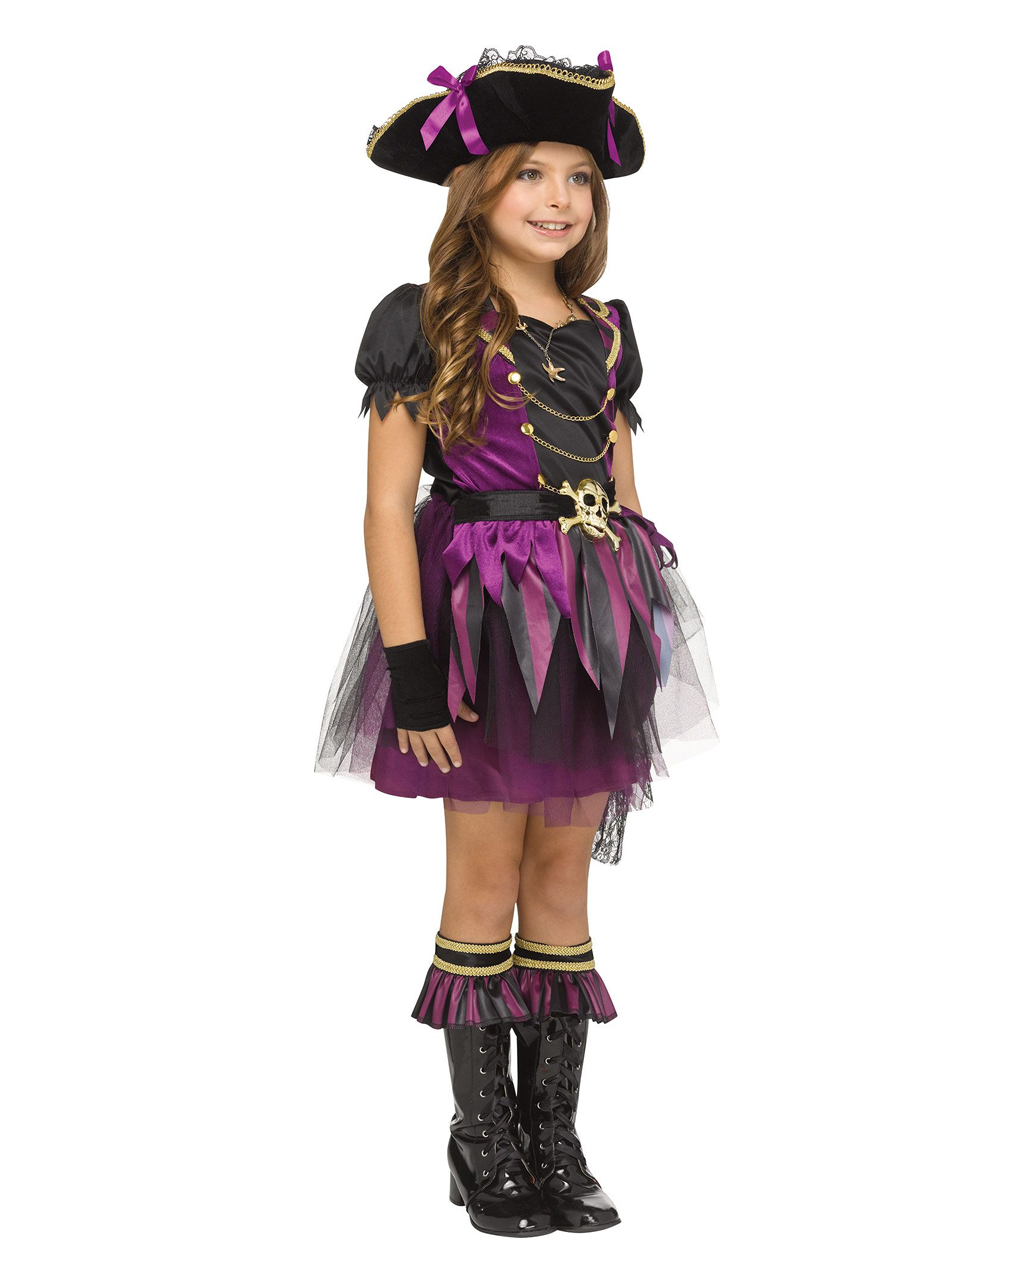 Stormy Pirate Princess Girl Costume for stormy parties | Horror-Shop.com